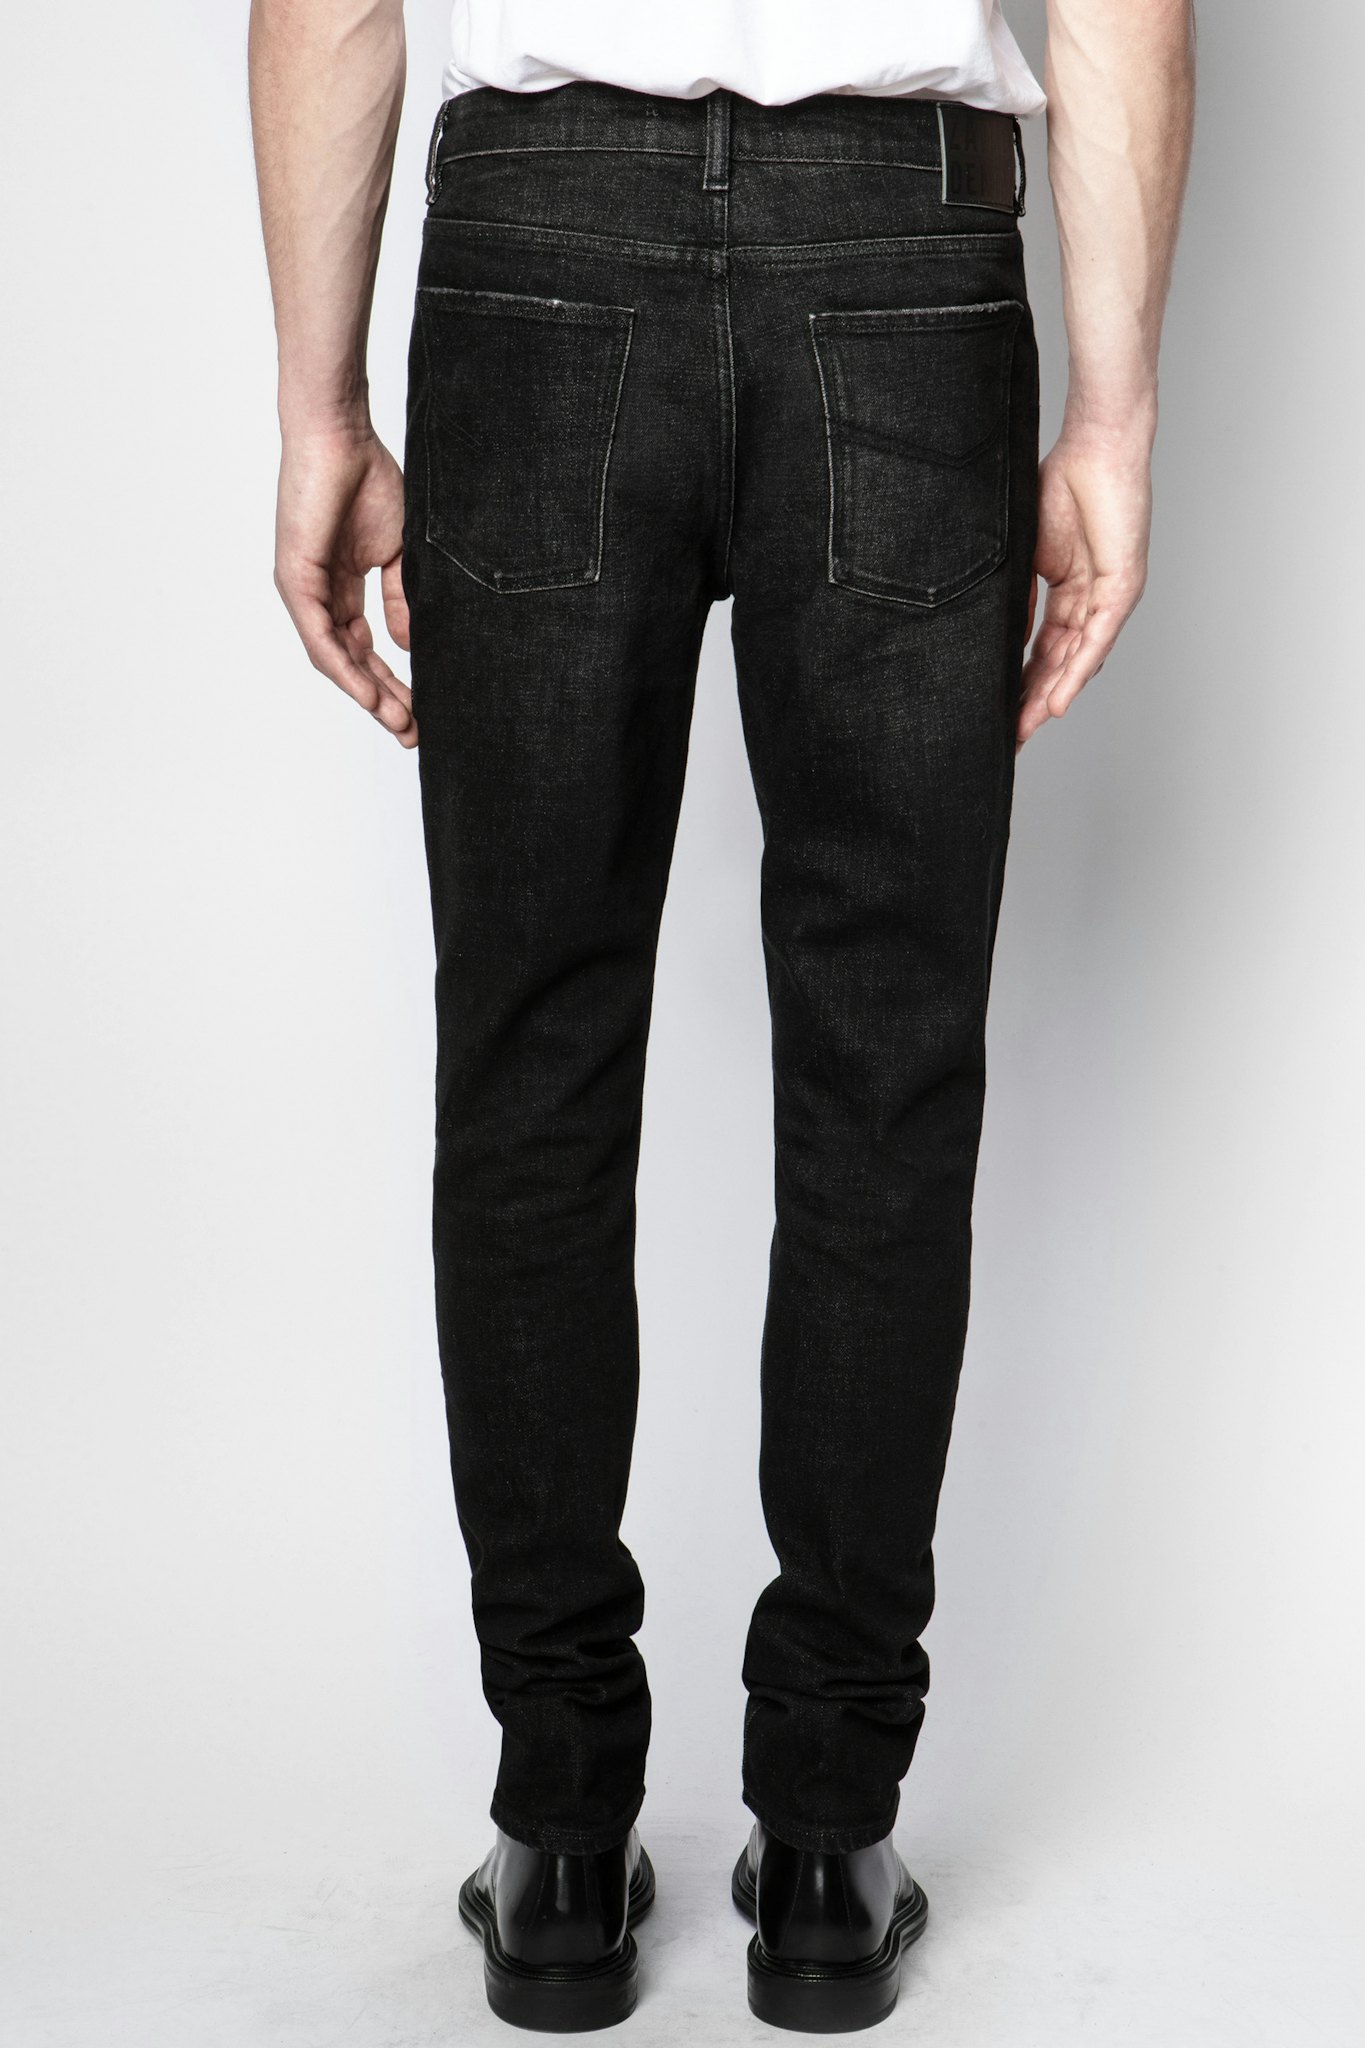 David Eco Jeans